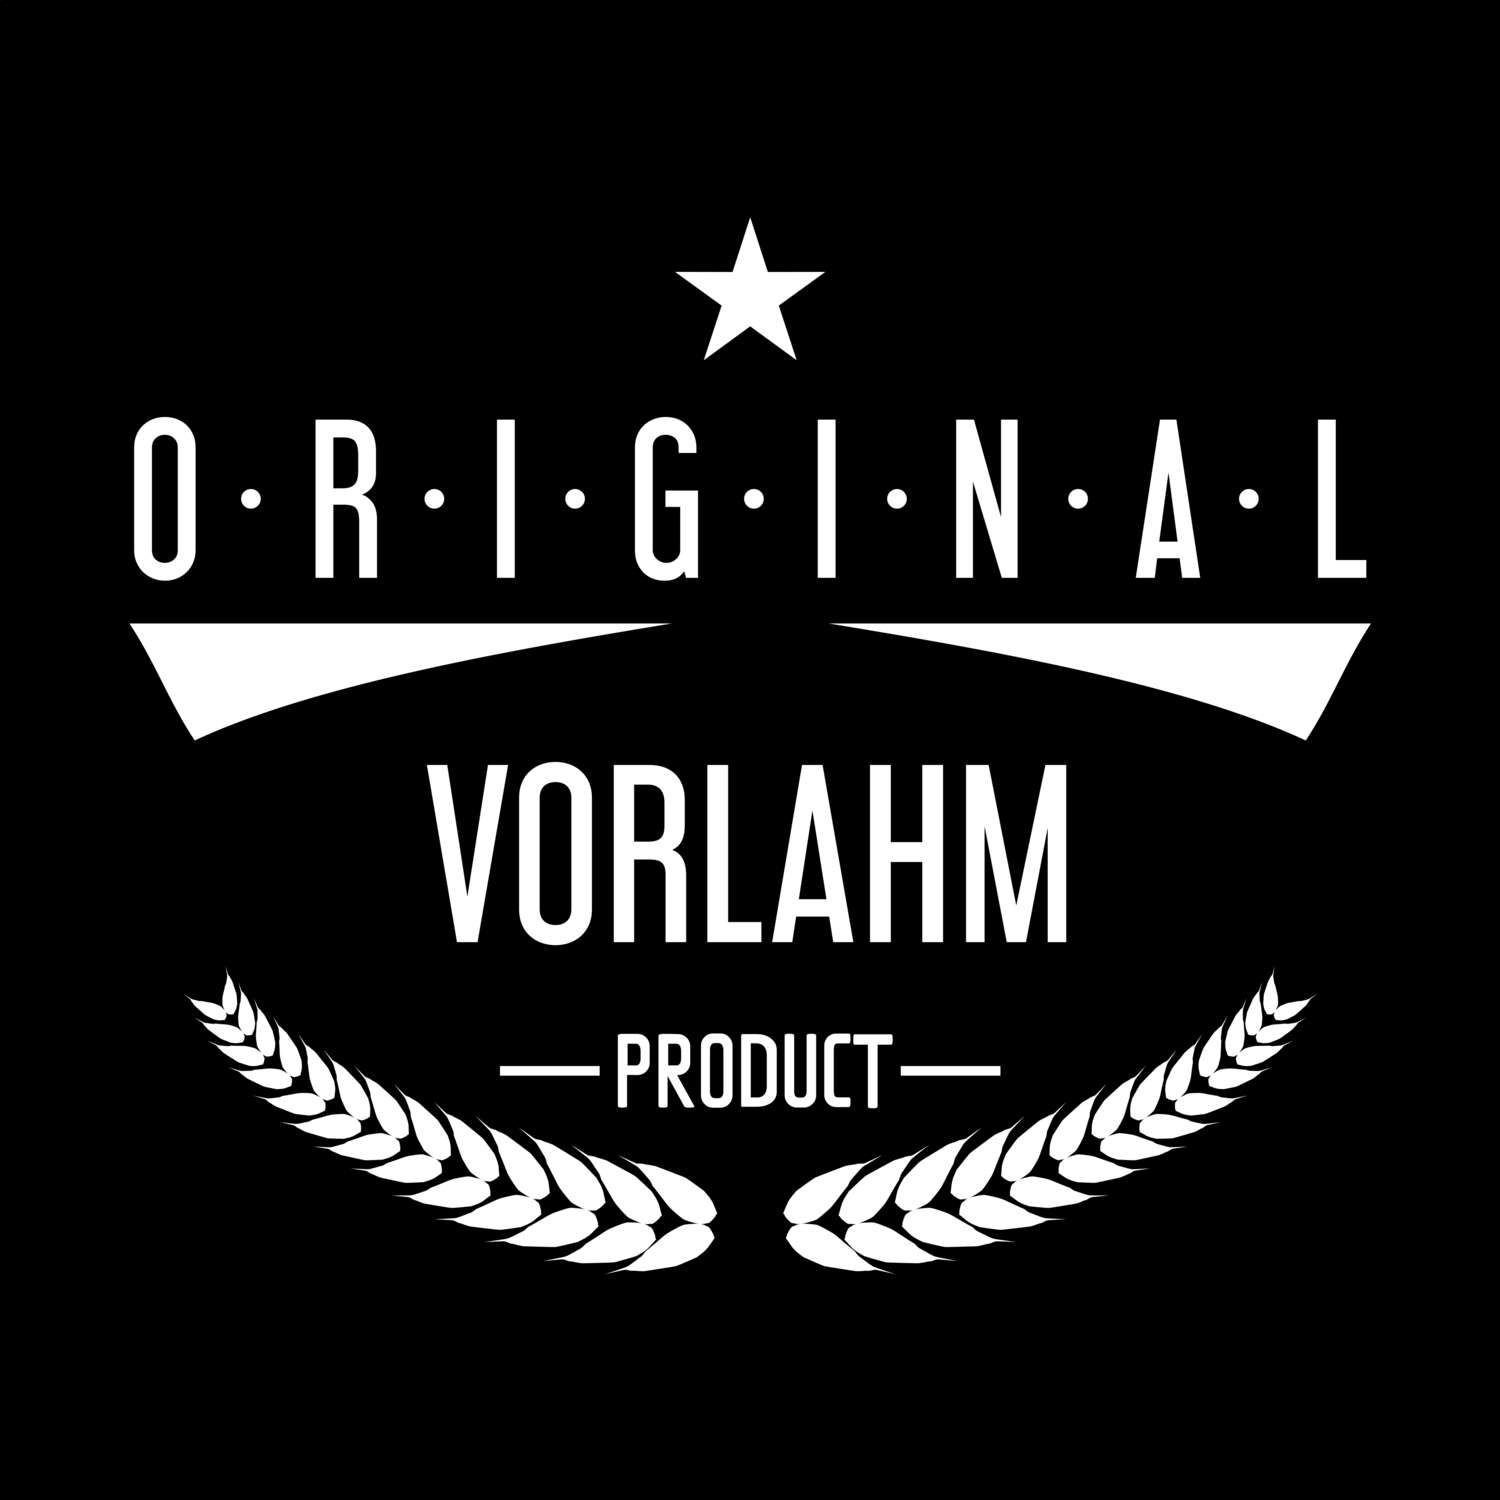 Vorlahm T-Shirt »Original Product«